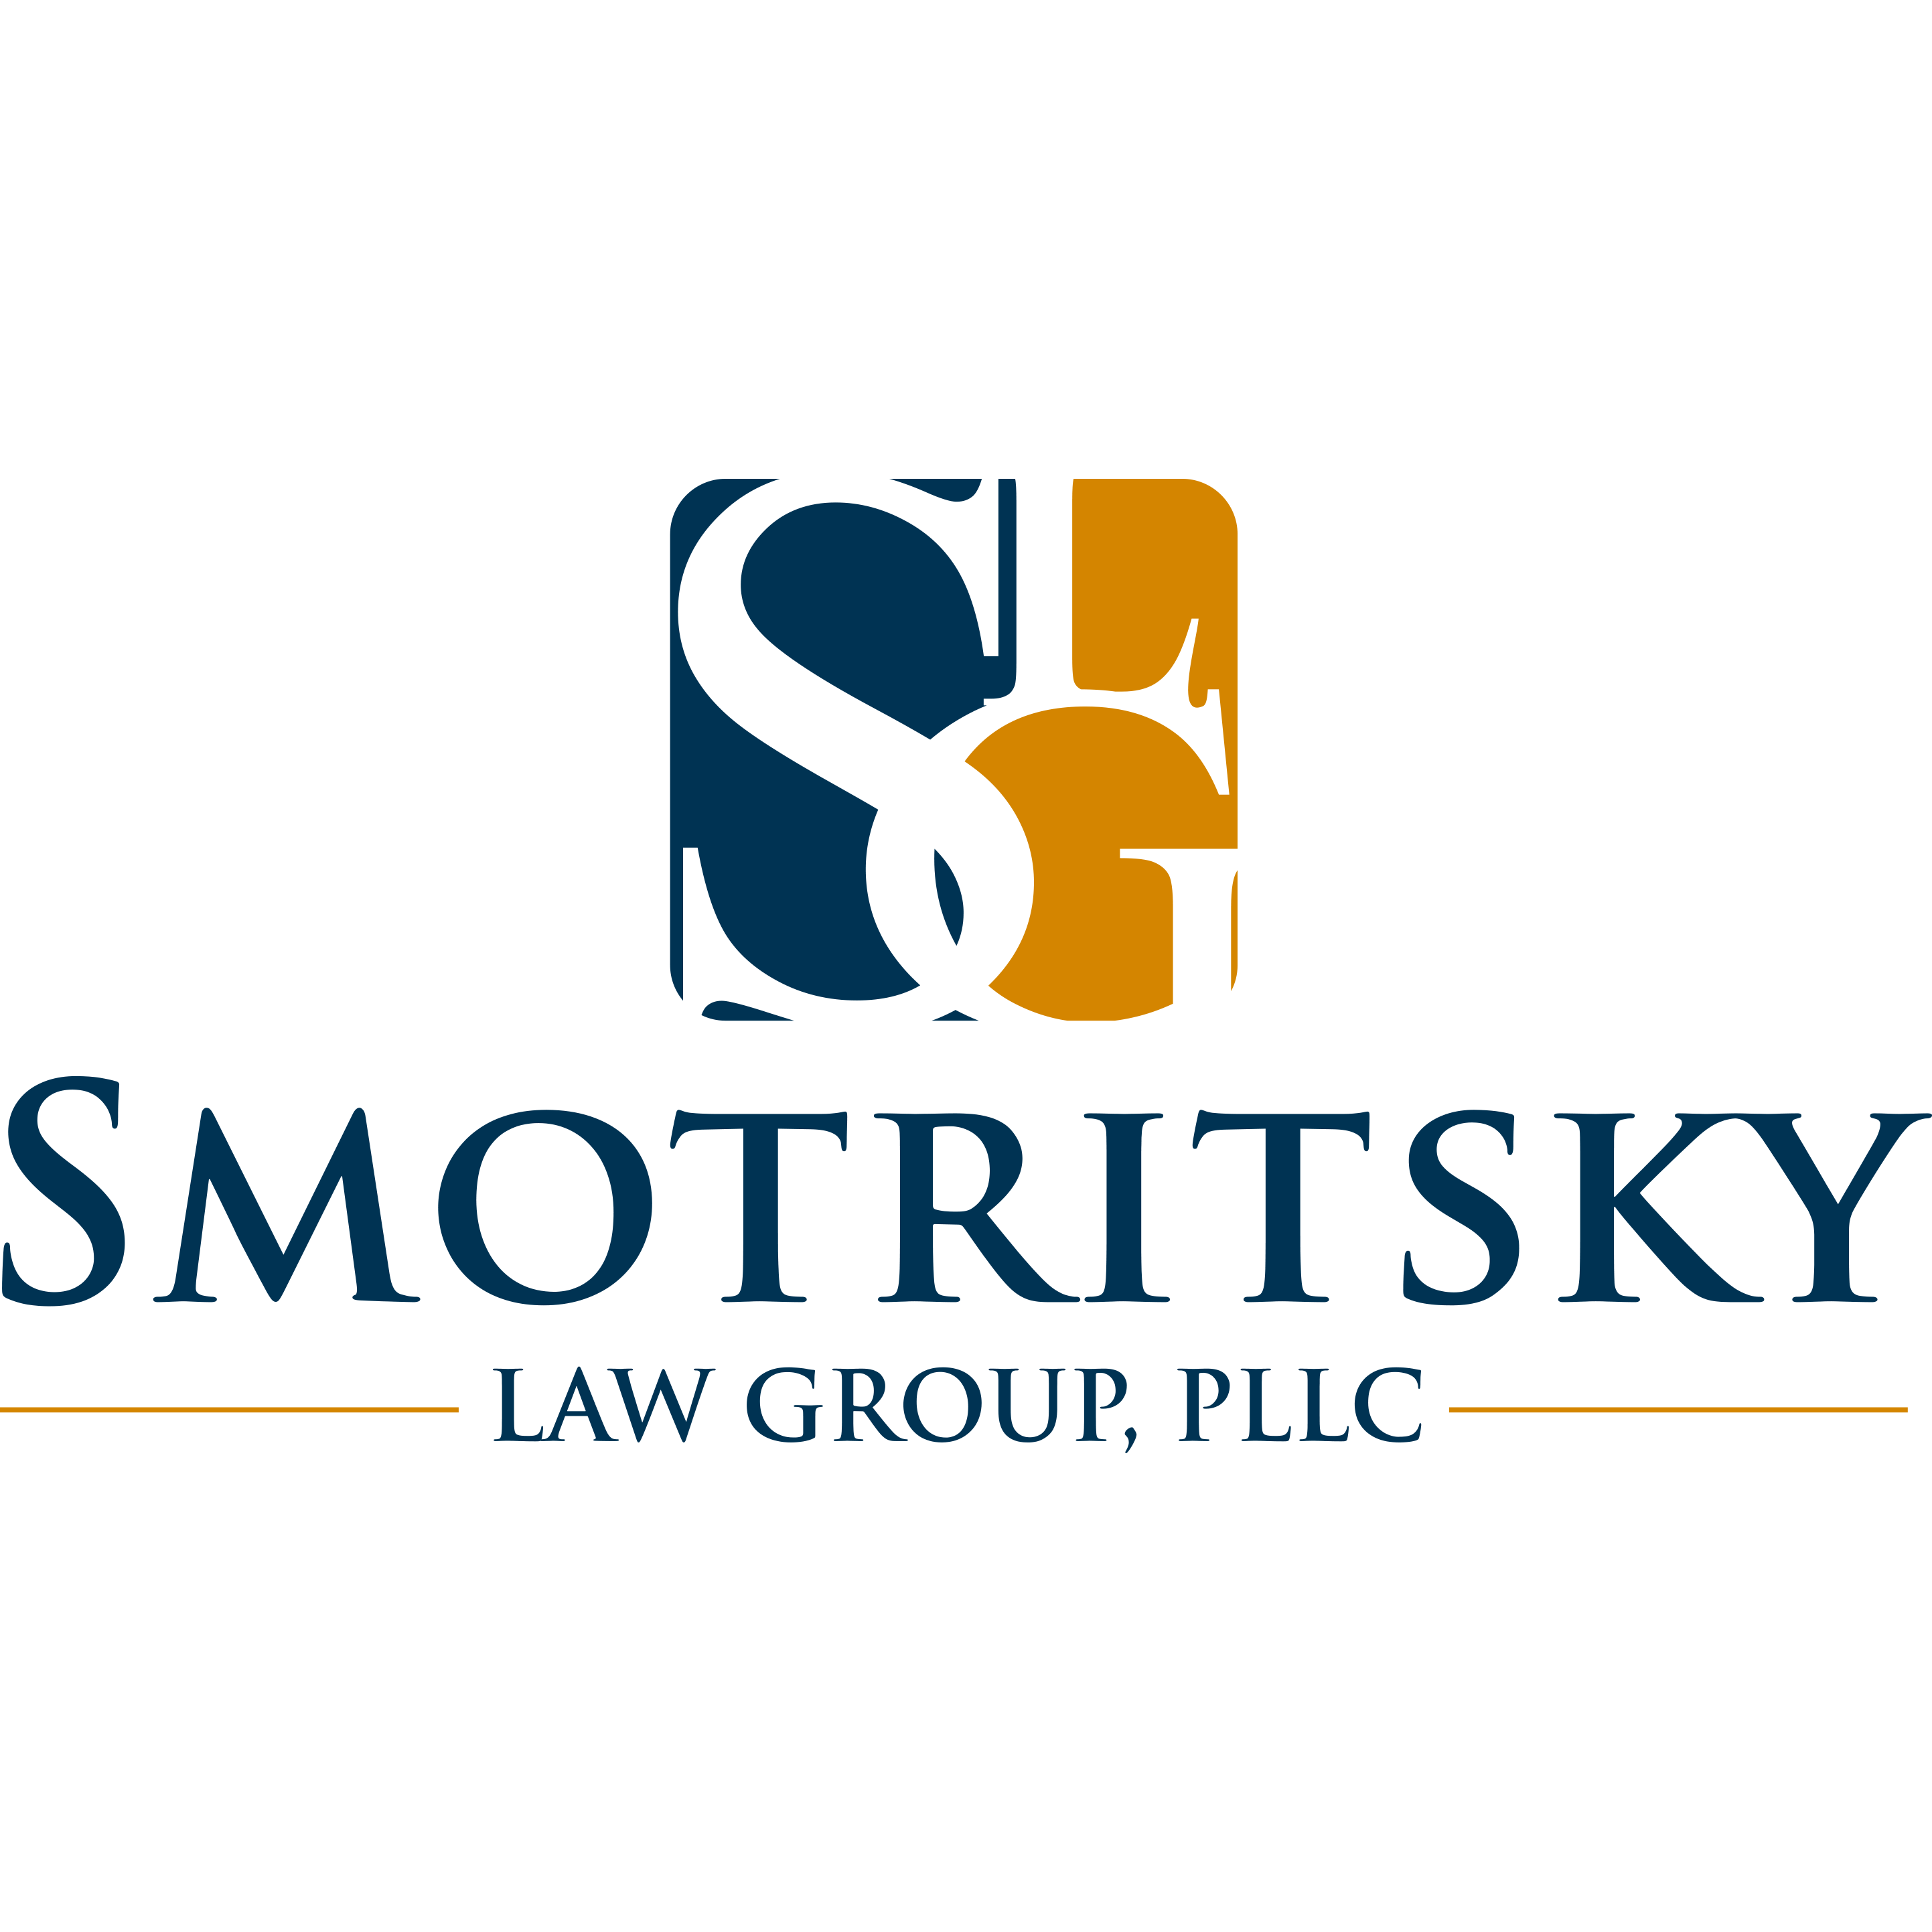 Smotritsky Law Group, PLLC - Newark, NJ 07102 - (212)969-8570 | ShowMeLocal.com